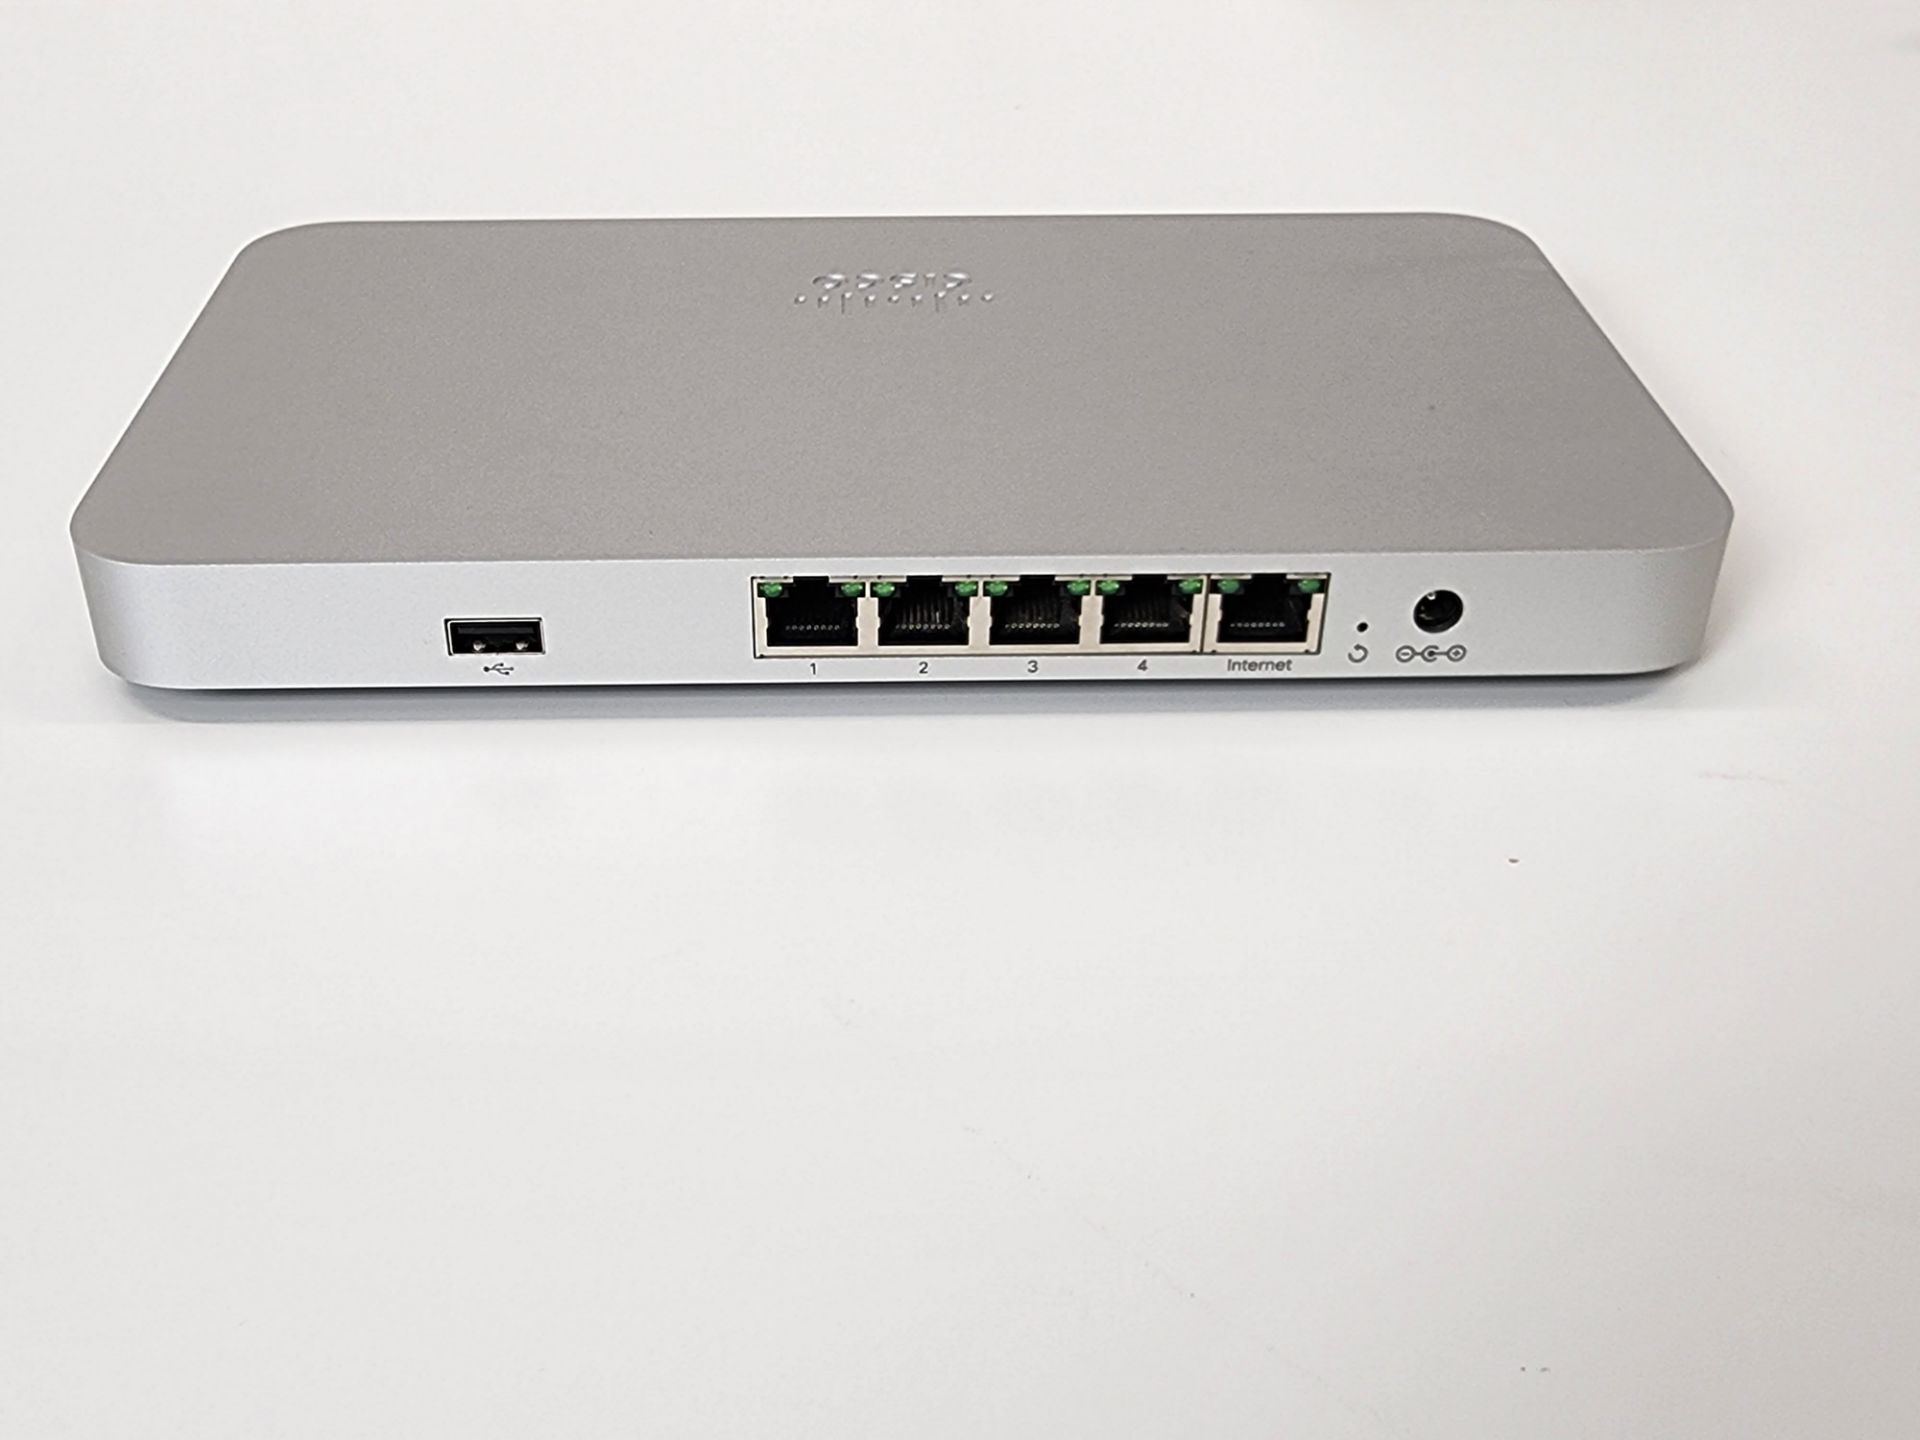 Cisco Meraki MX64-HW Cloud Managed Security Appliance With Original Box & Power Cord - Image 3 of 6